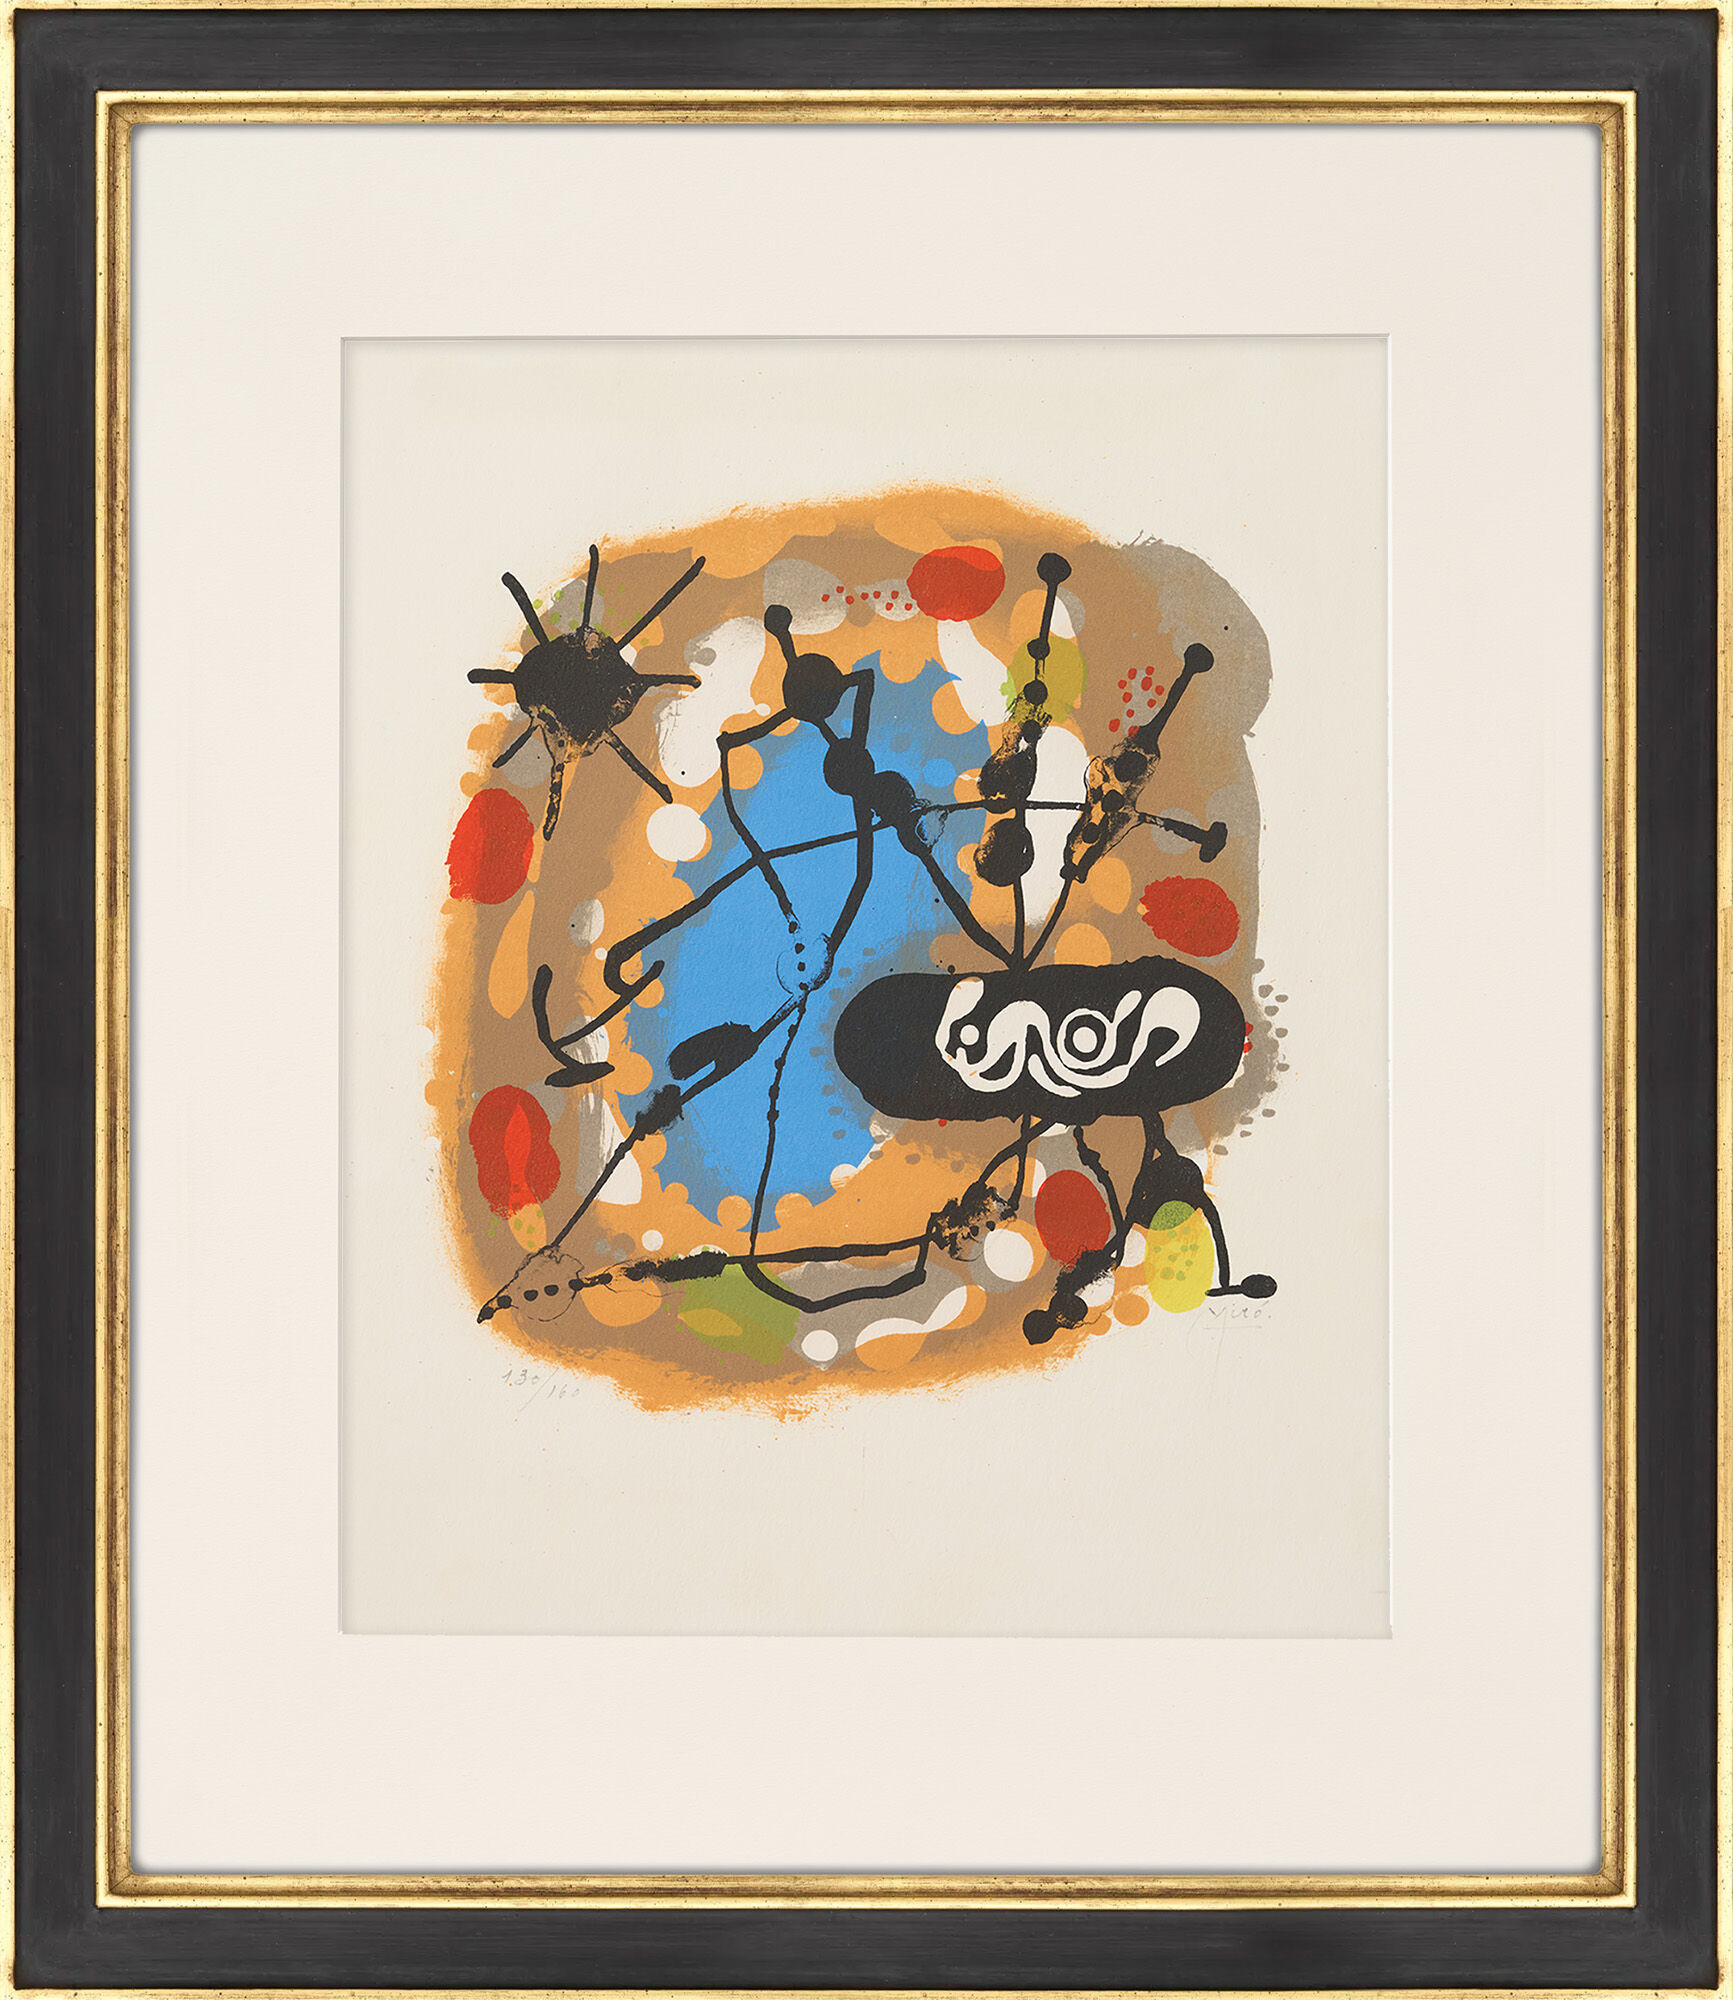 Beeld "Atmosphera Miro" (1959) von Joan Miró